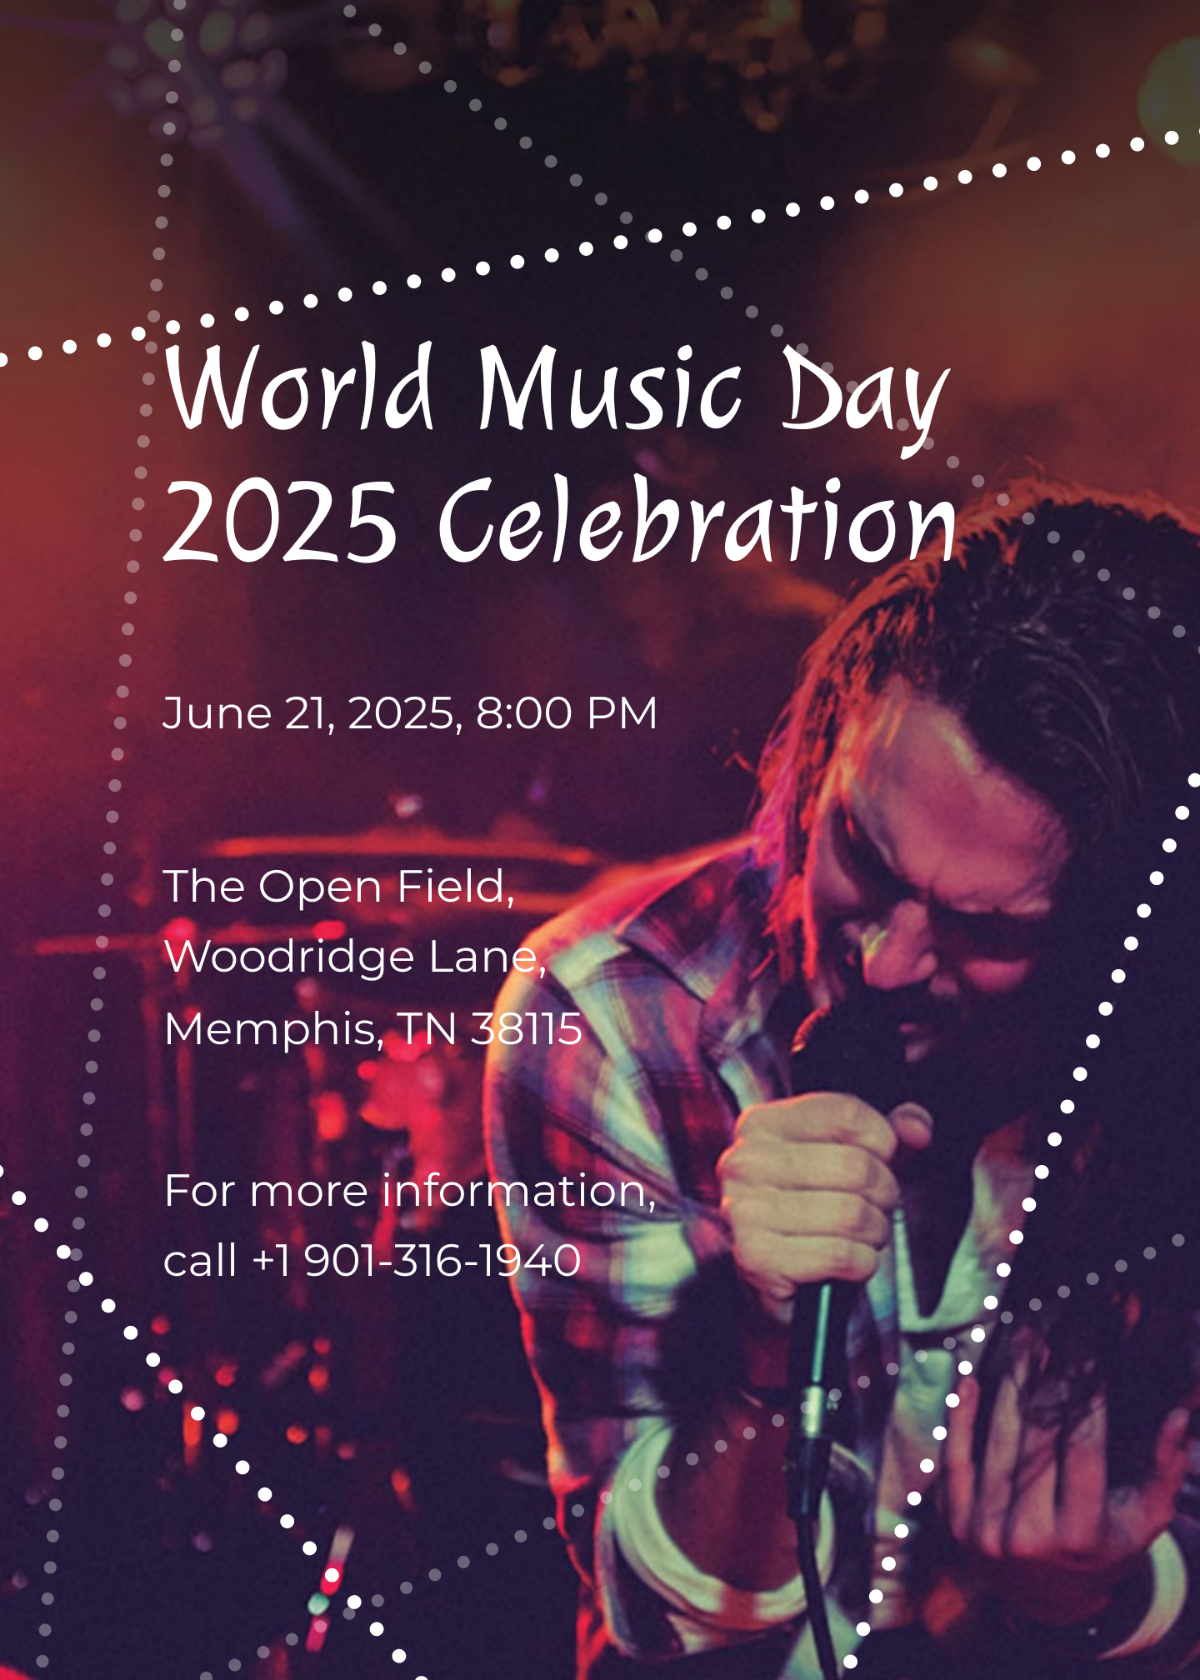 World Music Day Invitation Template